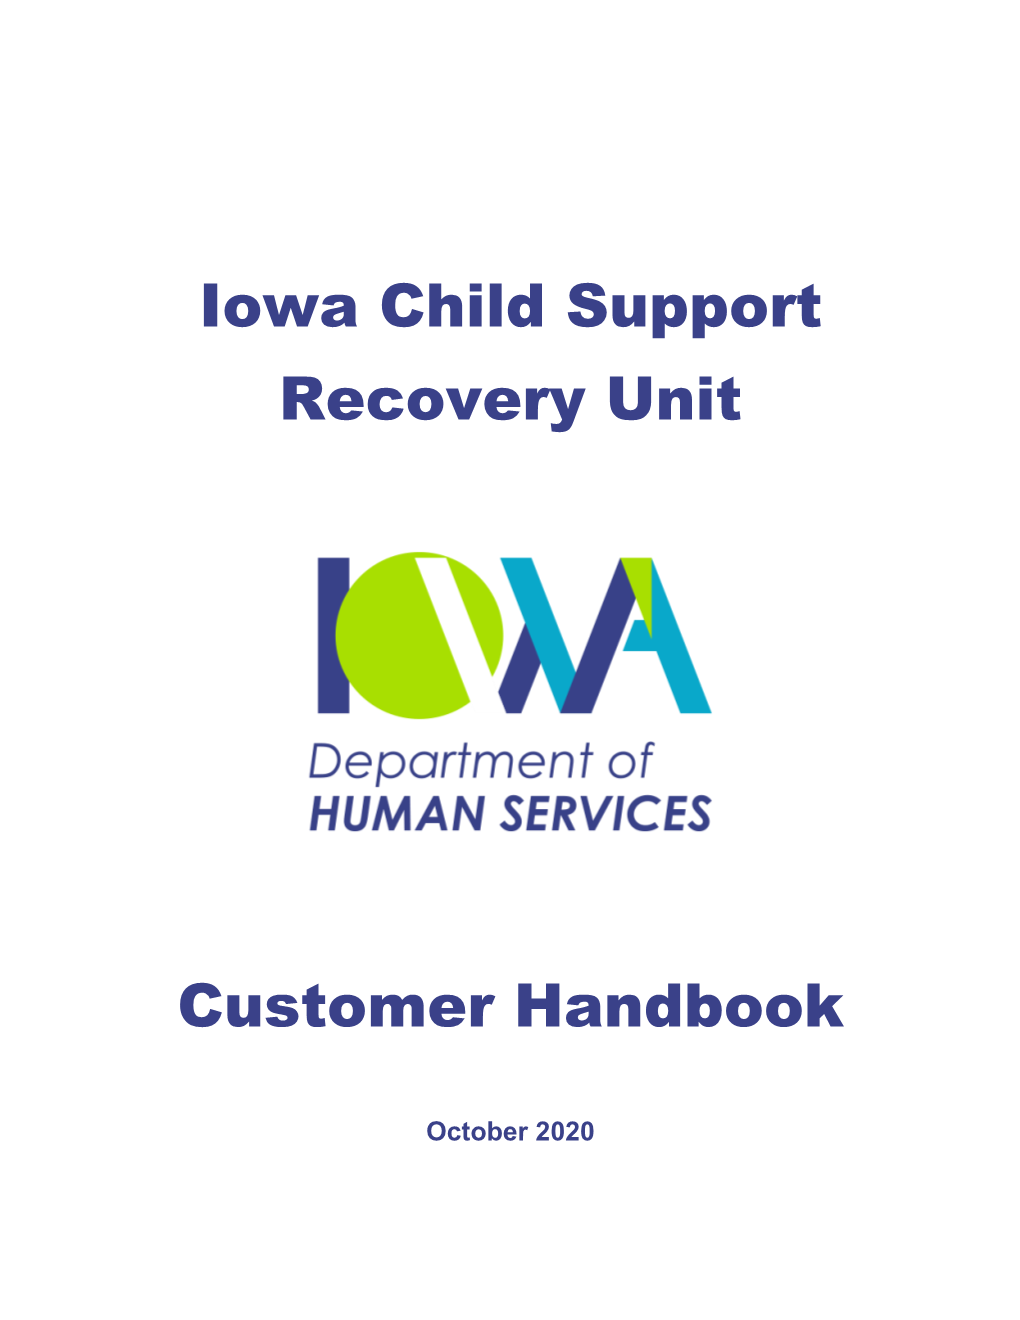 Iowa Child Support Recovery Unit Customer Handbook 1